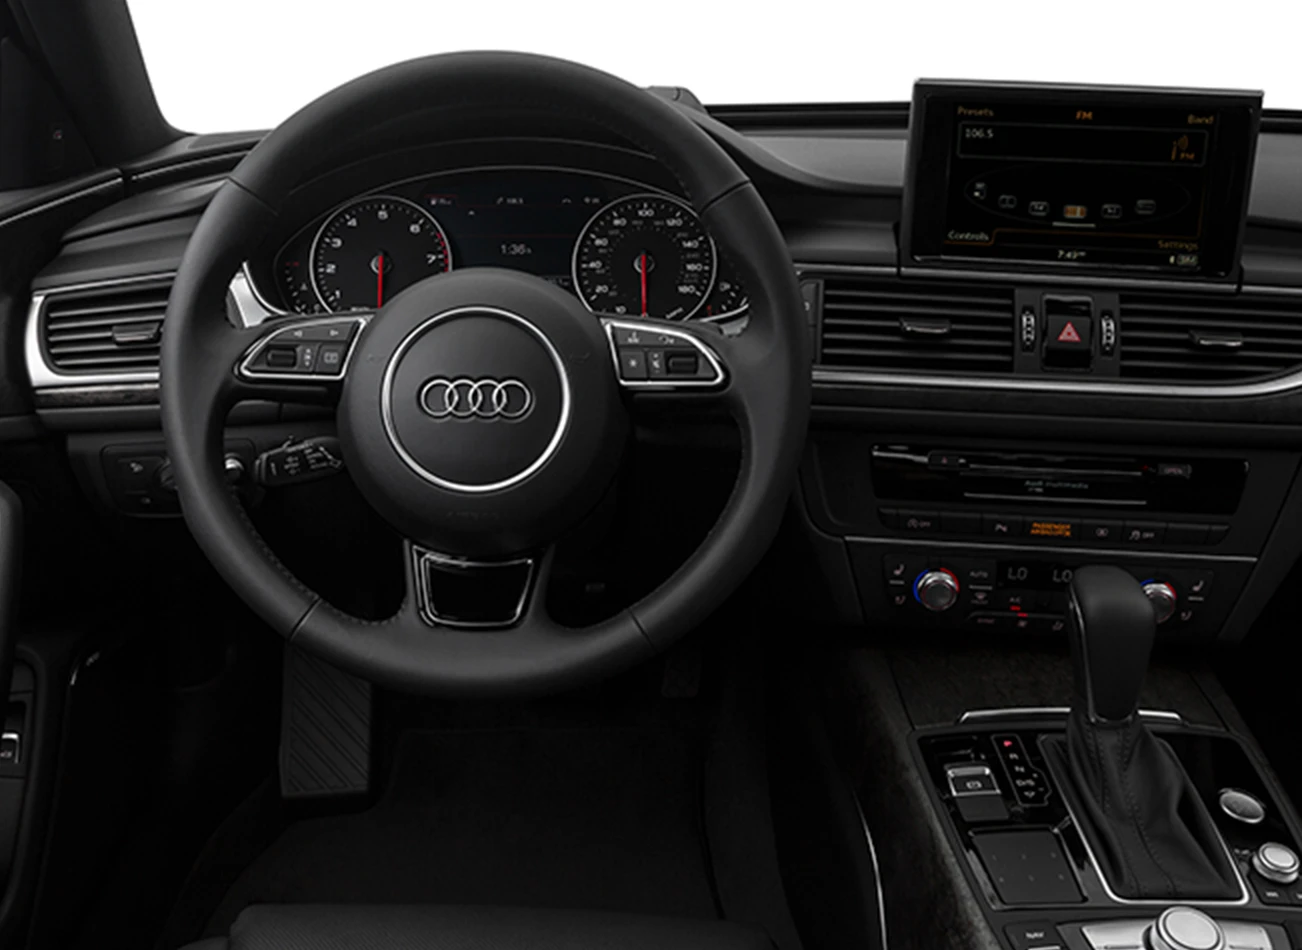 2017 Audi A6 Review: Dashboard Tech | CarMax